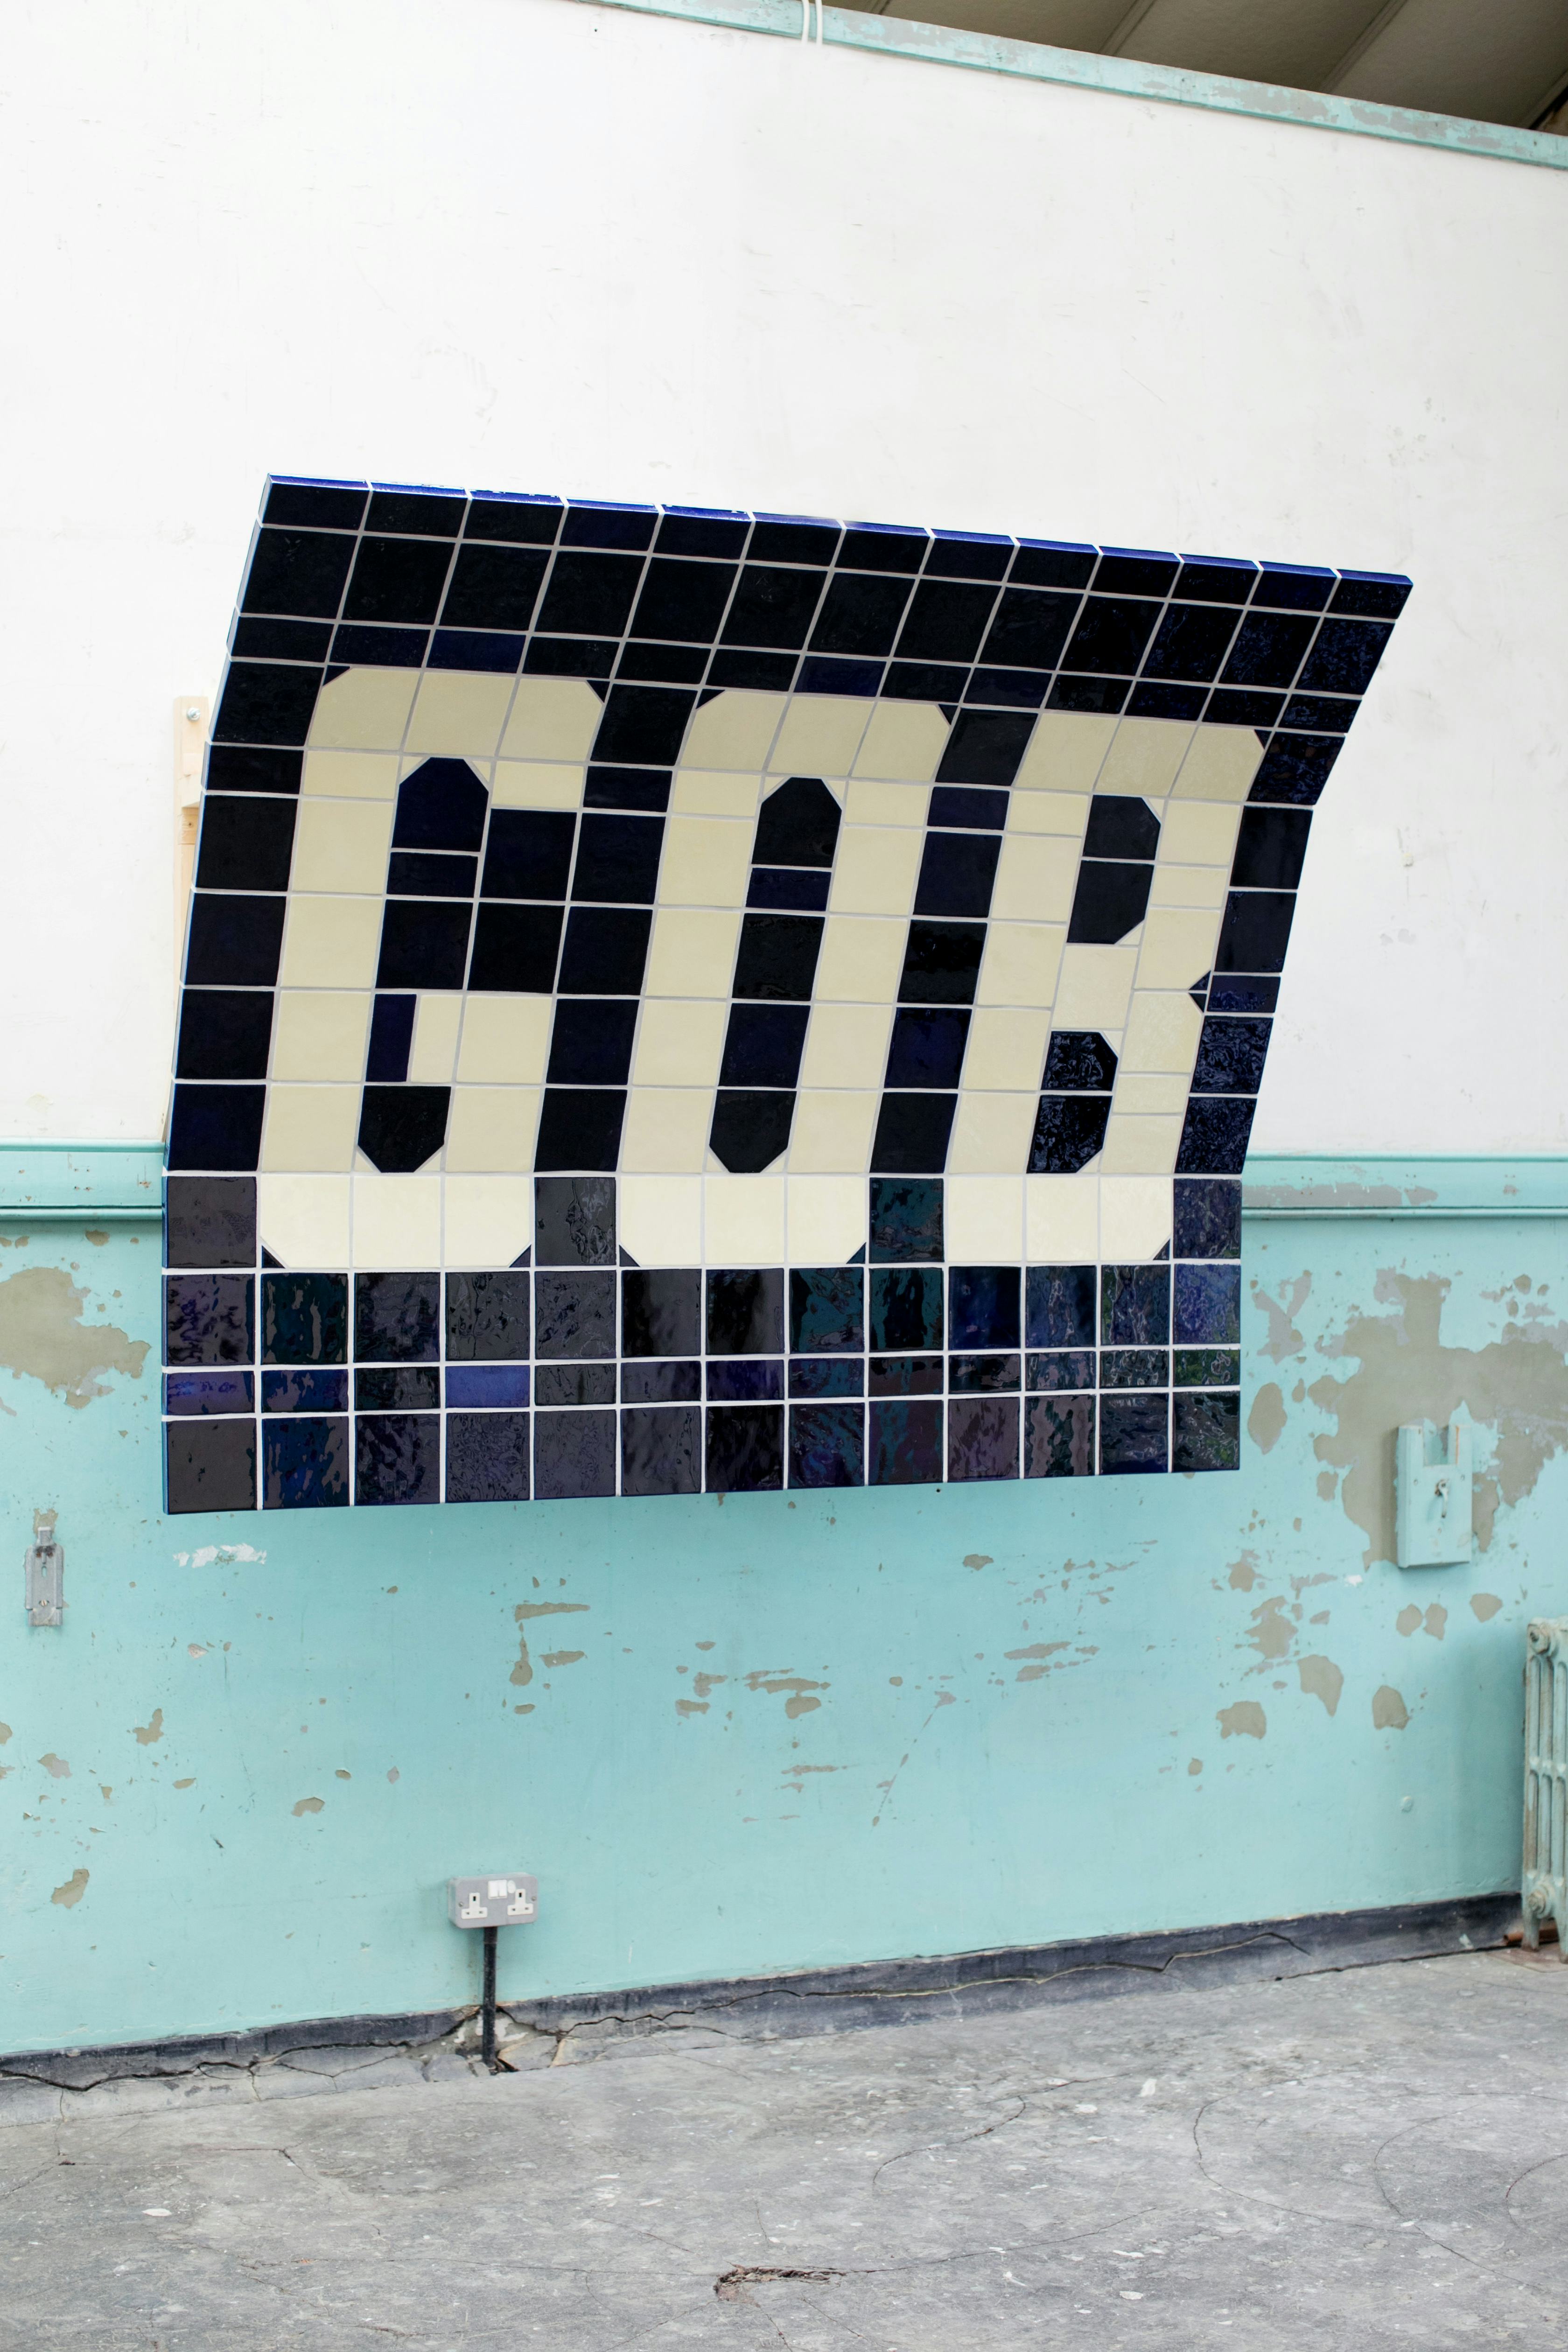 A tiled artwork spelling the letters G O B